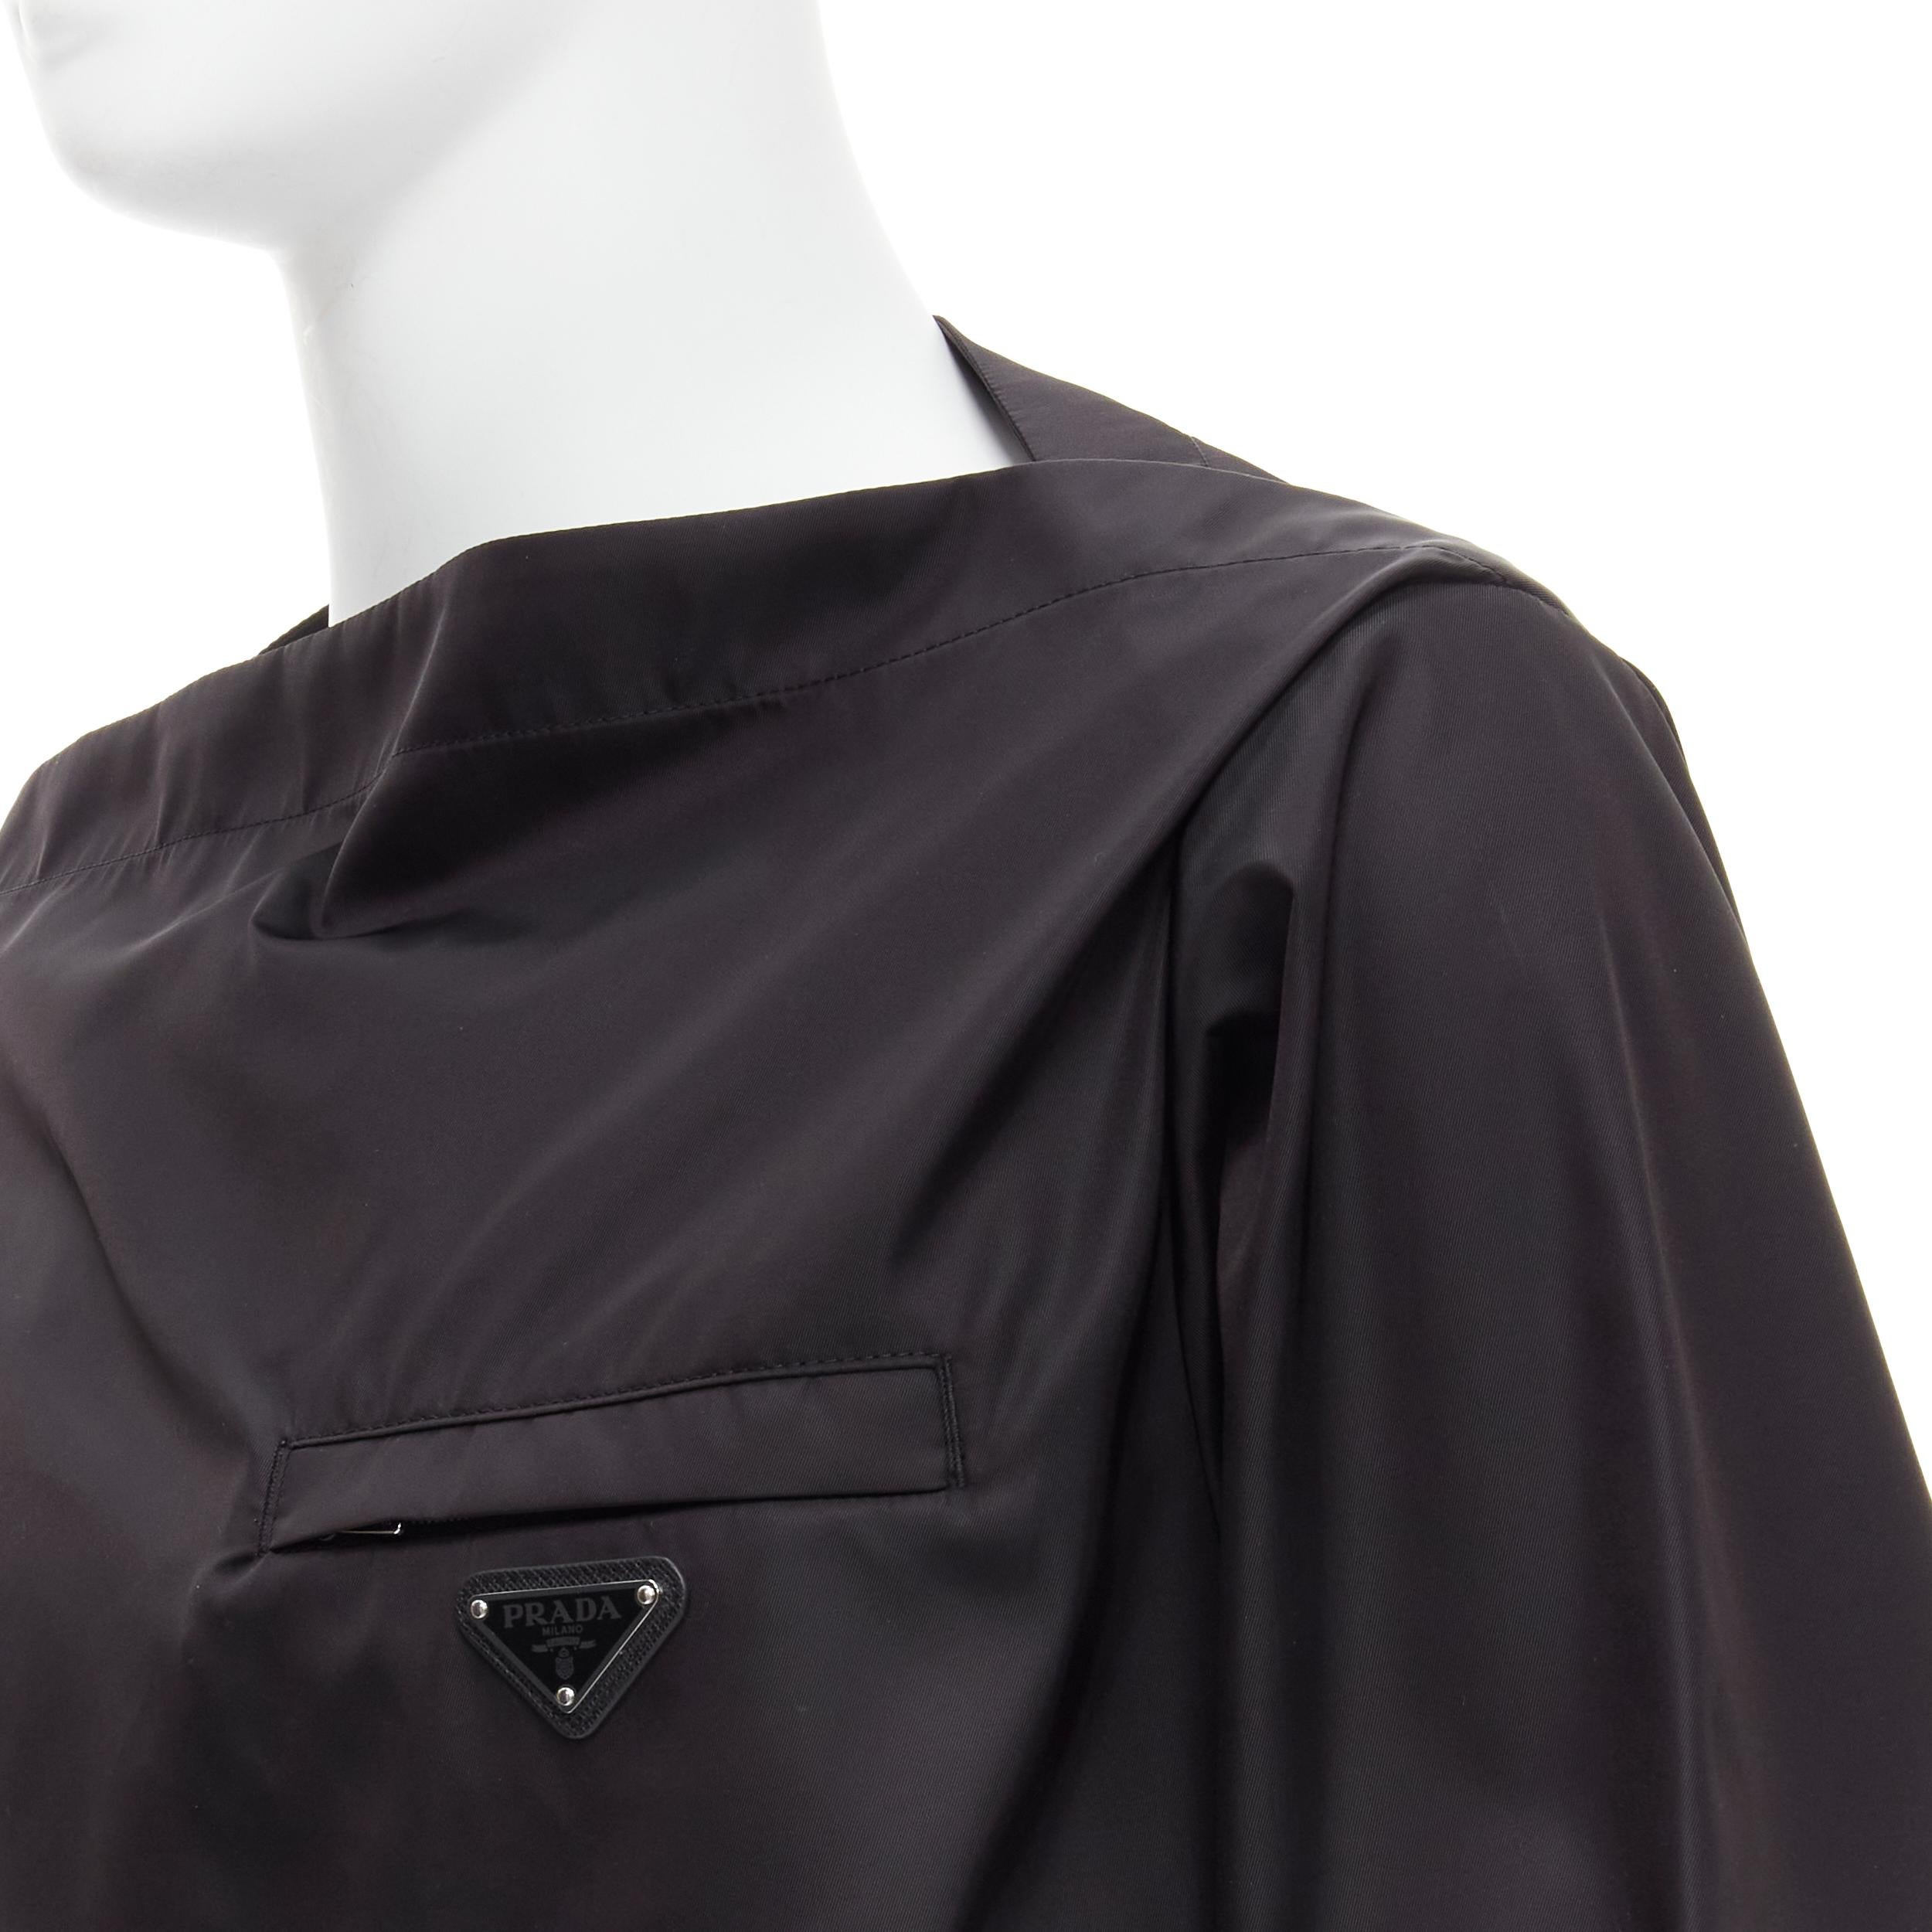 Black PRADA 2020 Re-Nylon black boat neck triangle logo seal popover sweater shell 